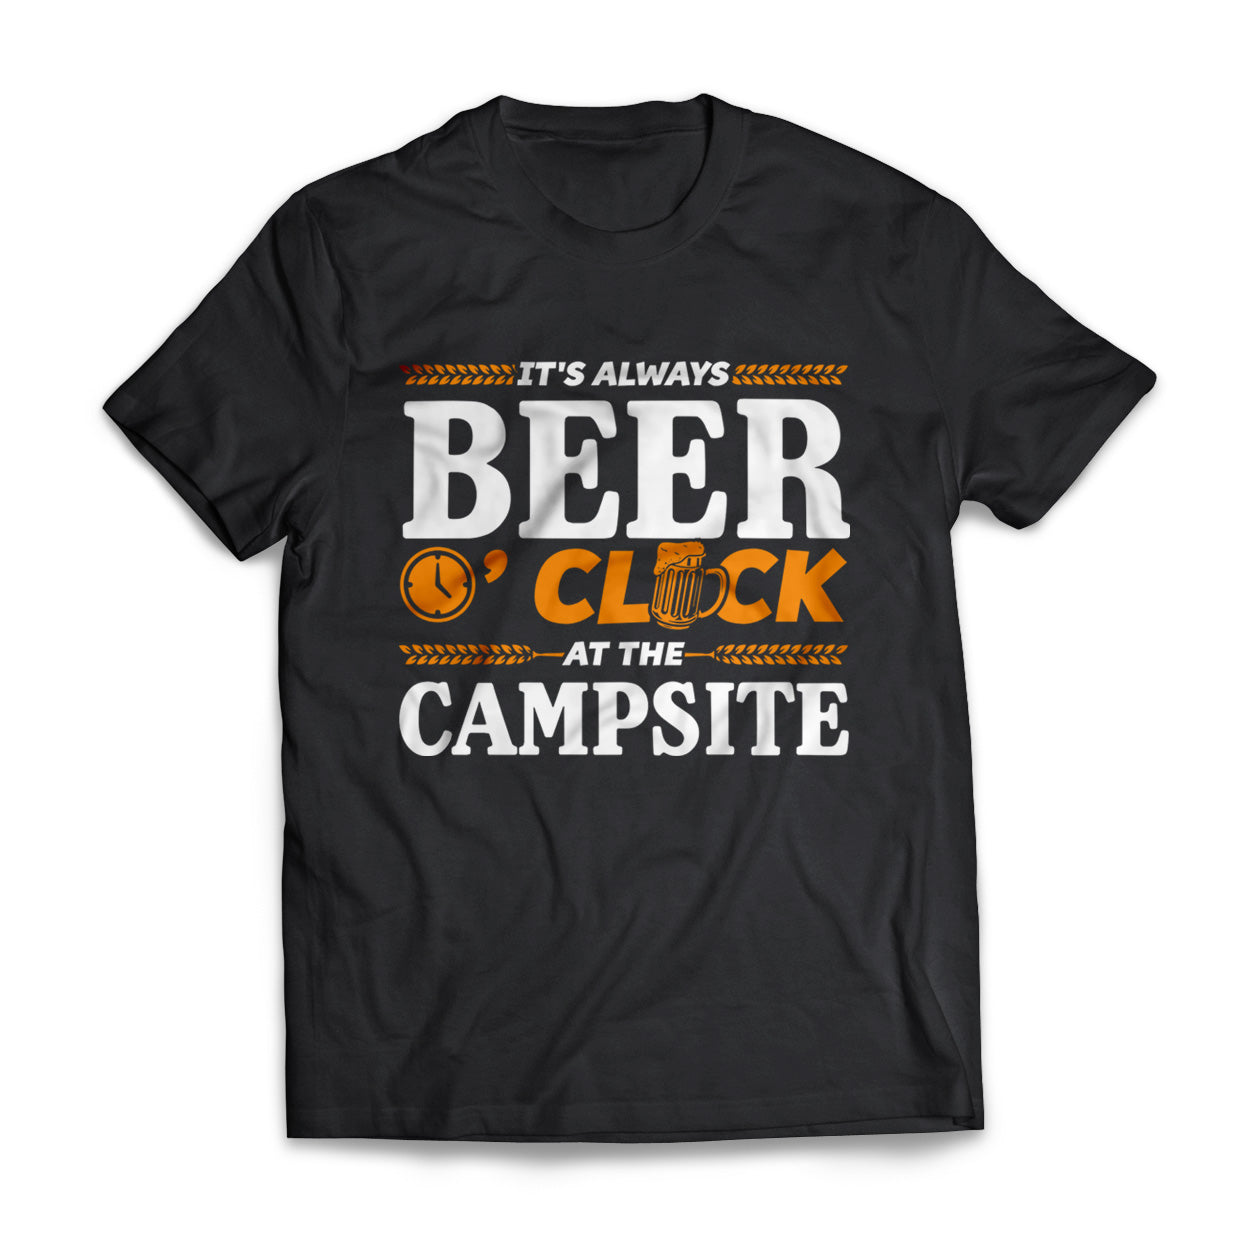 Beer O'clock Campsite Short Sleeve Tee